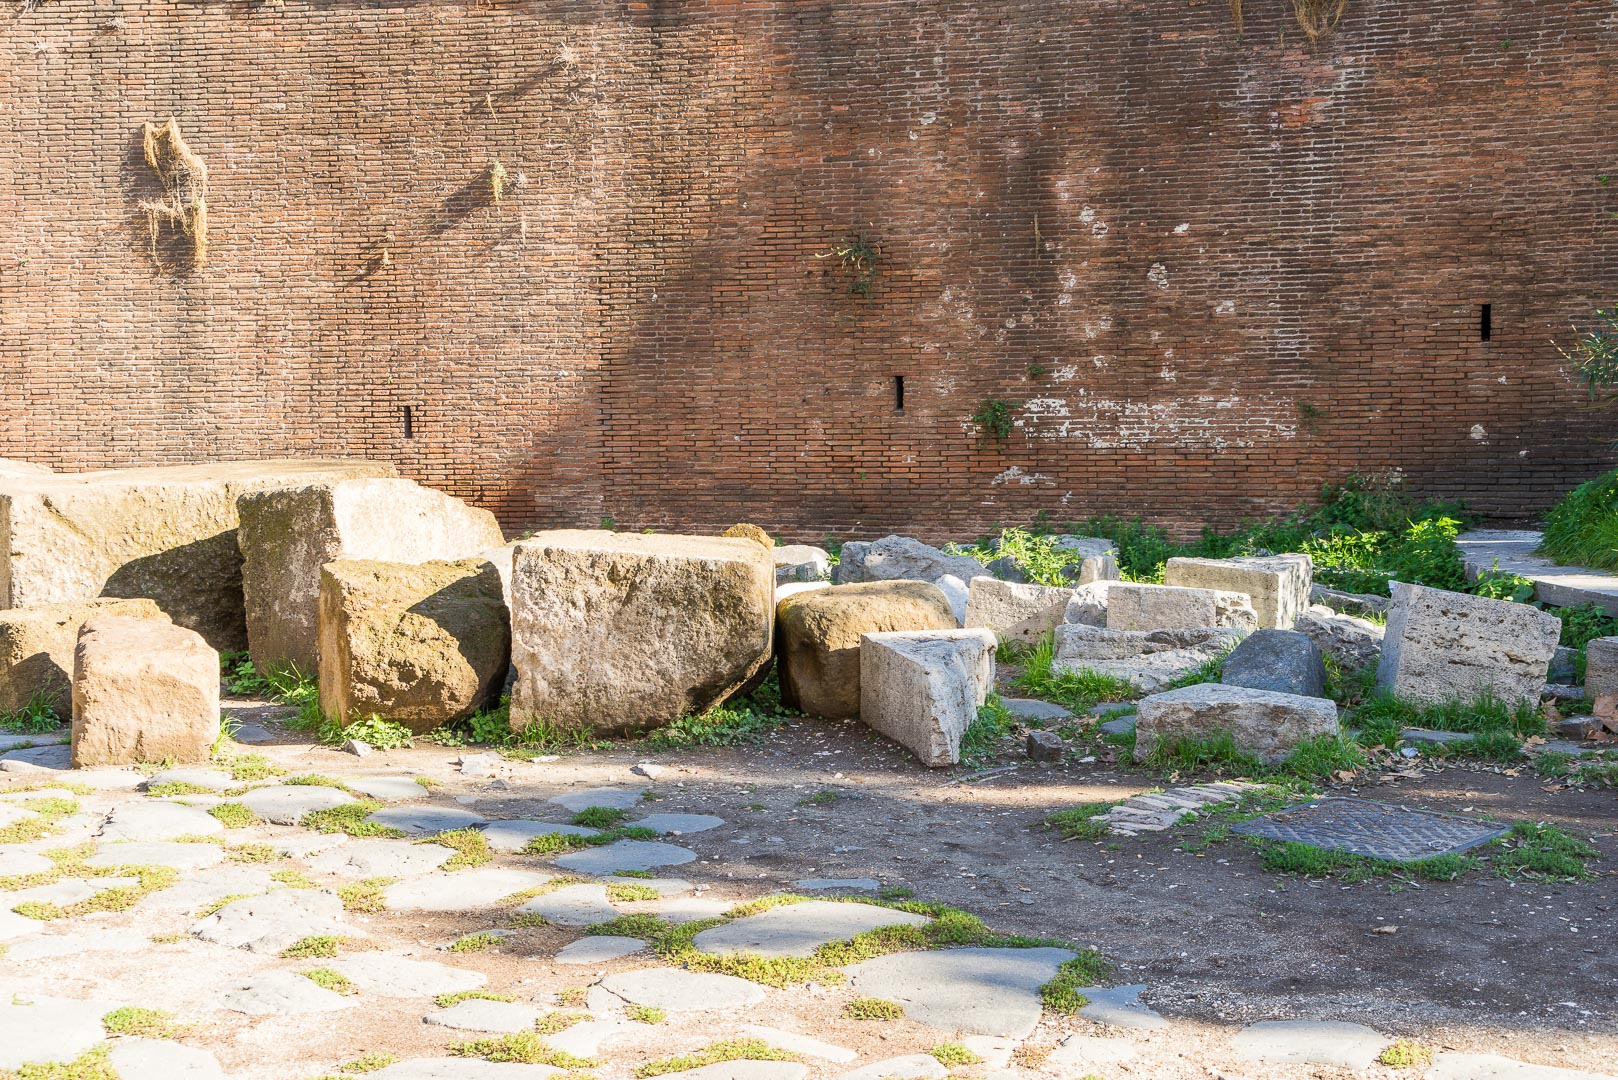 Backplate • ID: 12282 • HDRI Haven - Ruins Of Colosseum